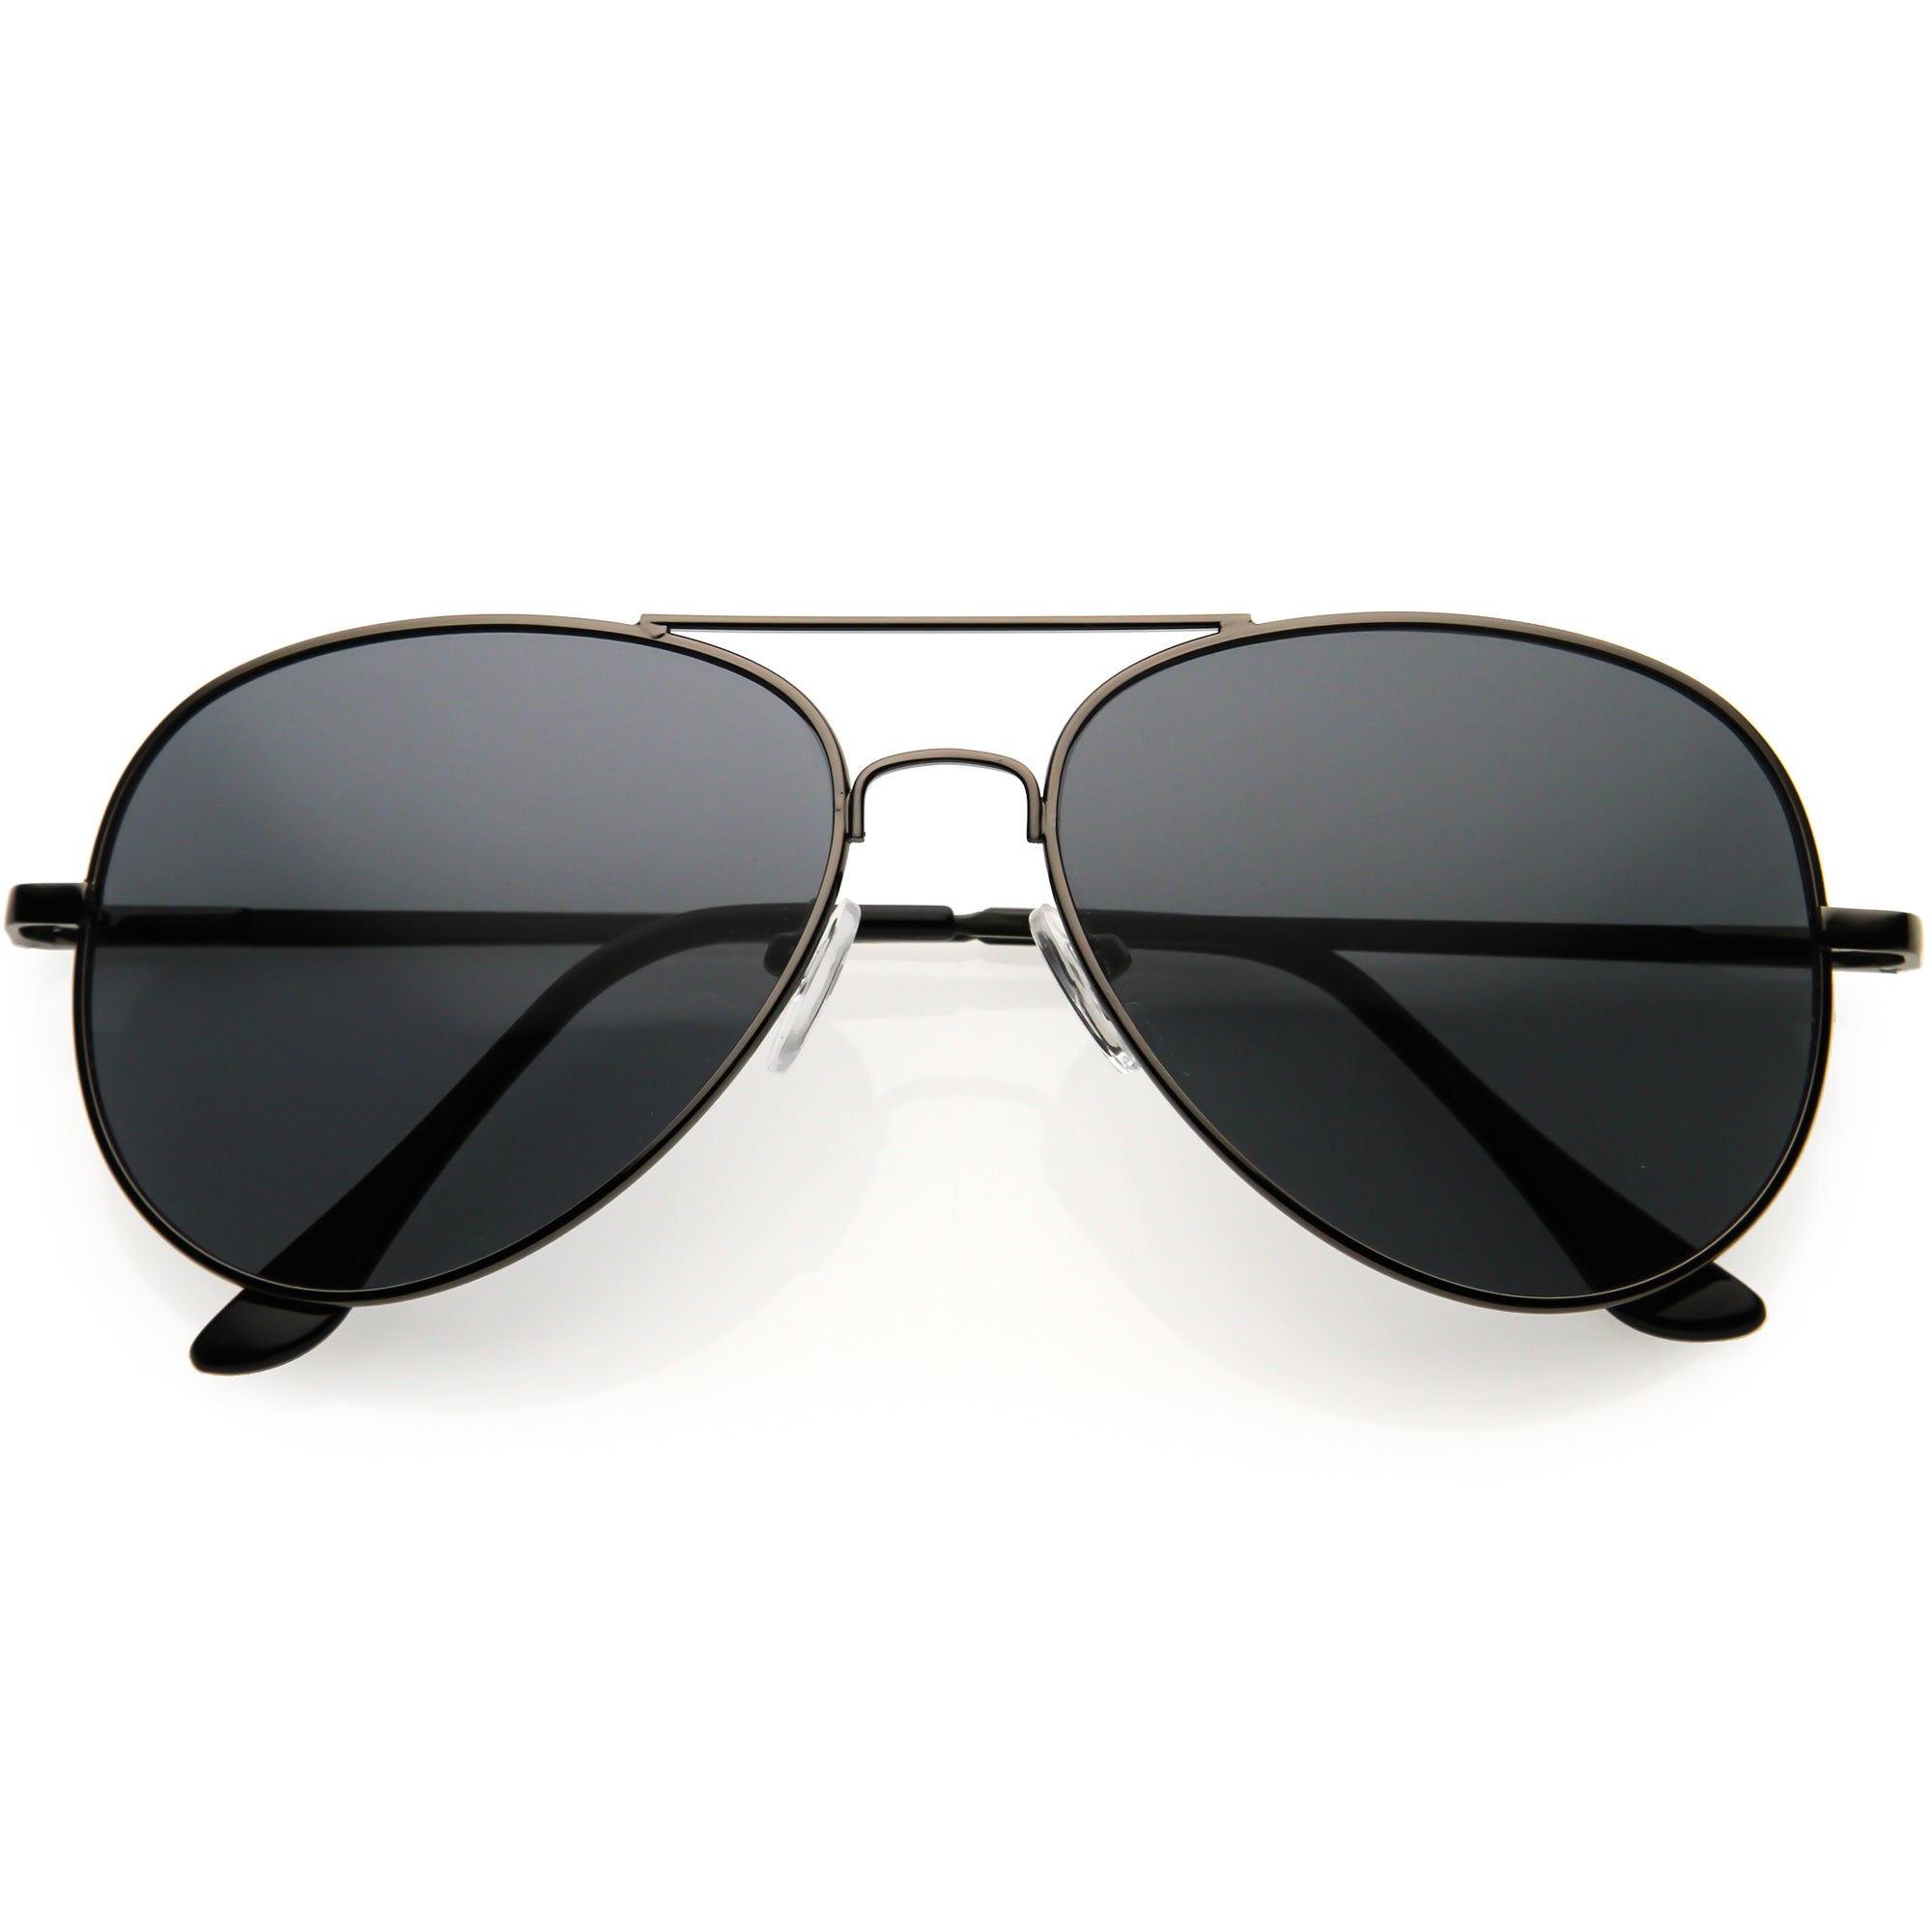 Classic Everyday Medium Sized Metal Aviator Sunglasses D118